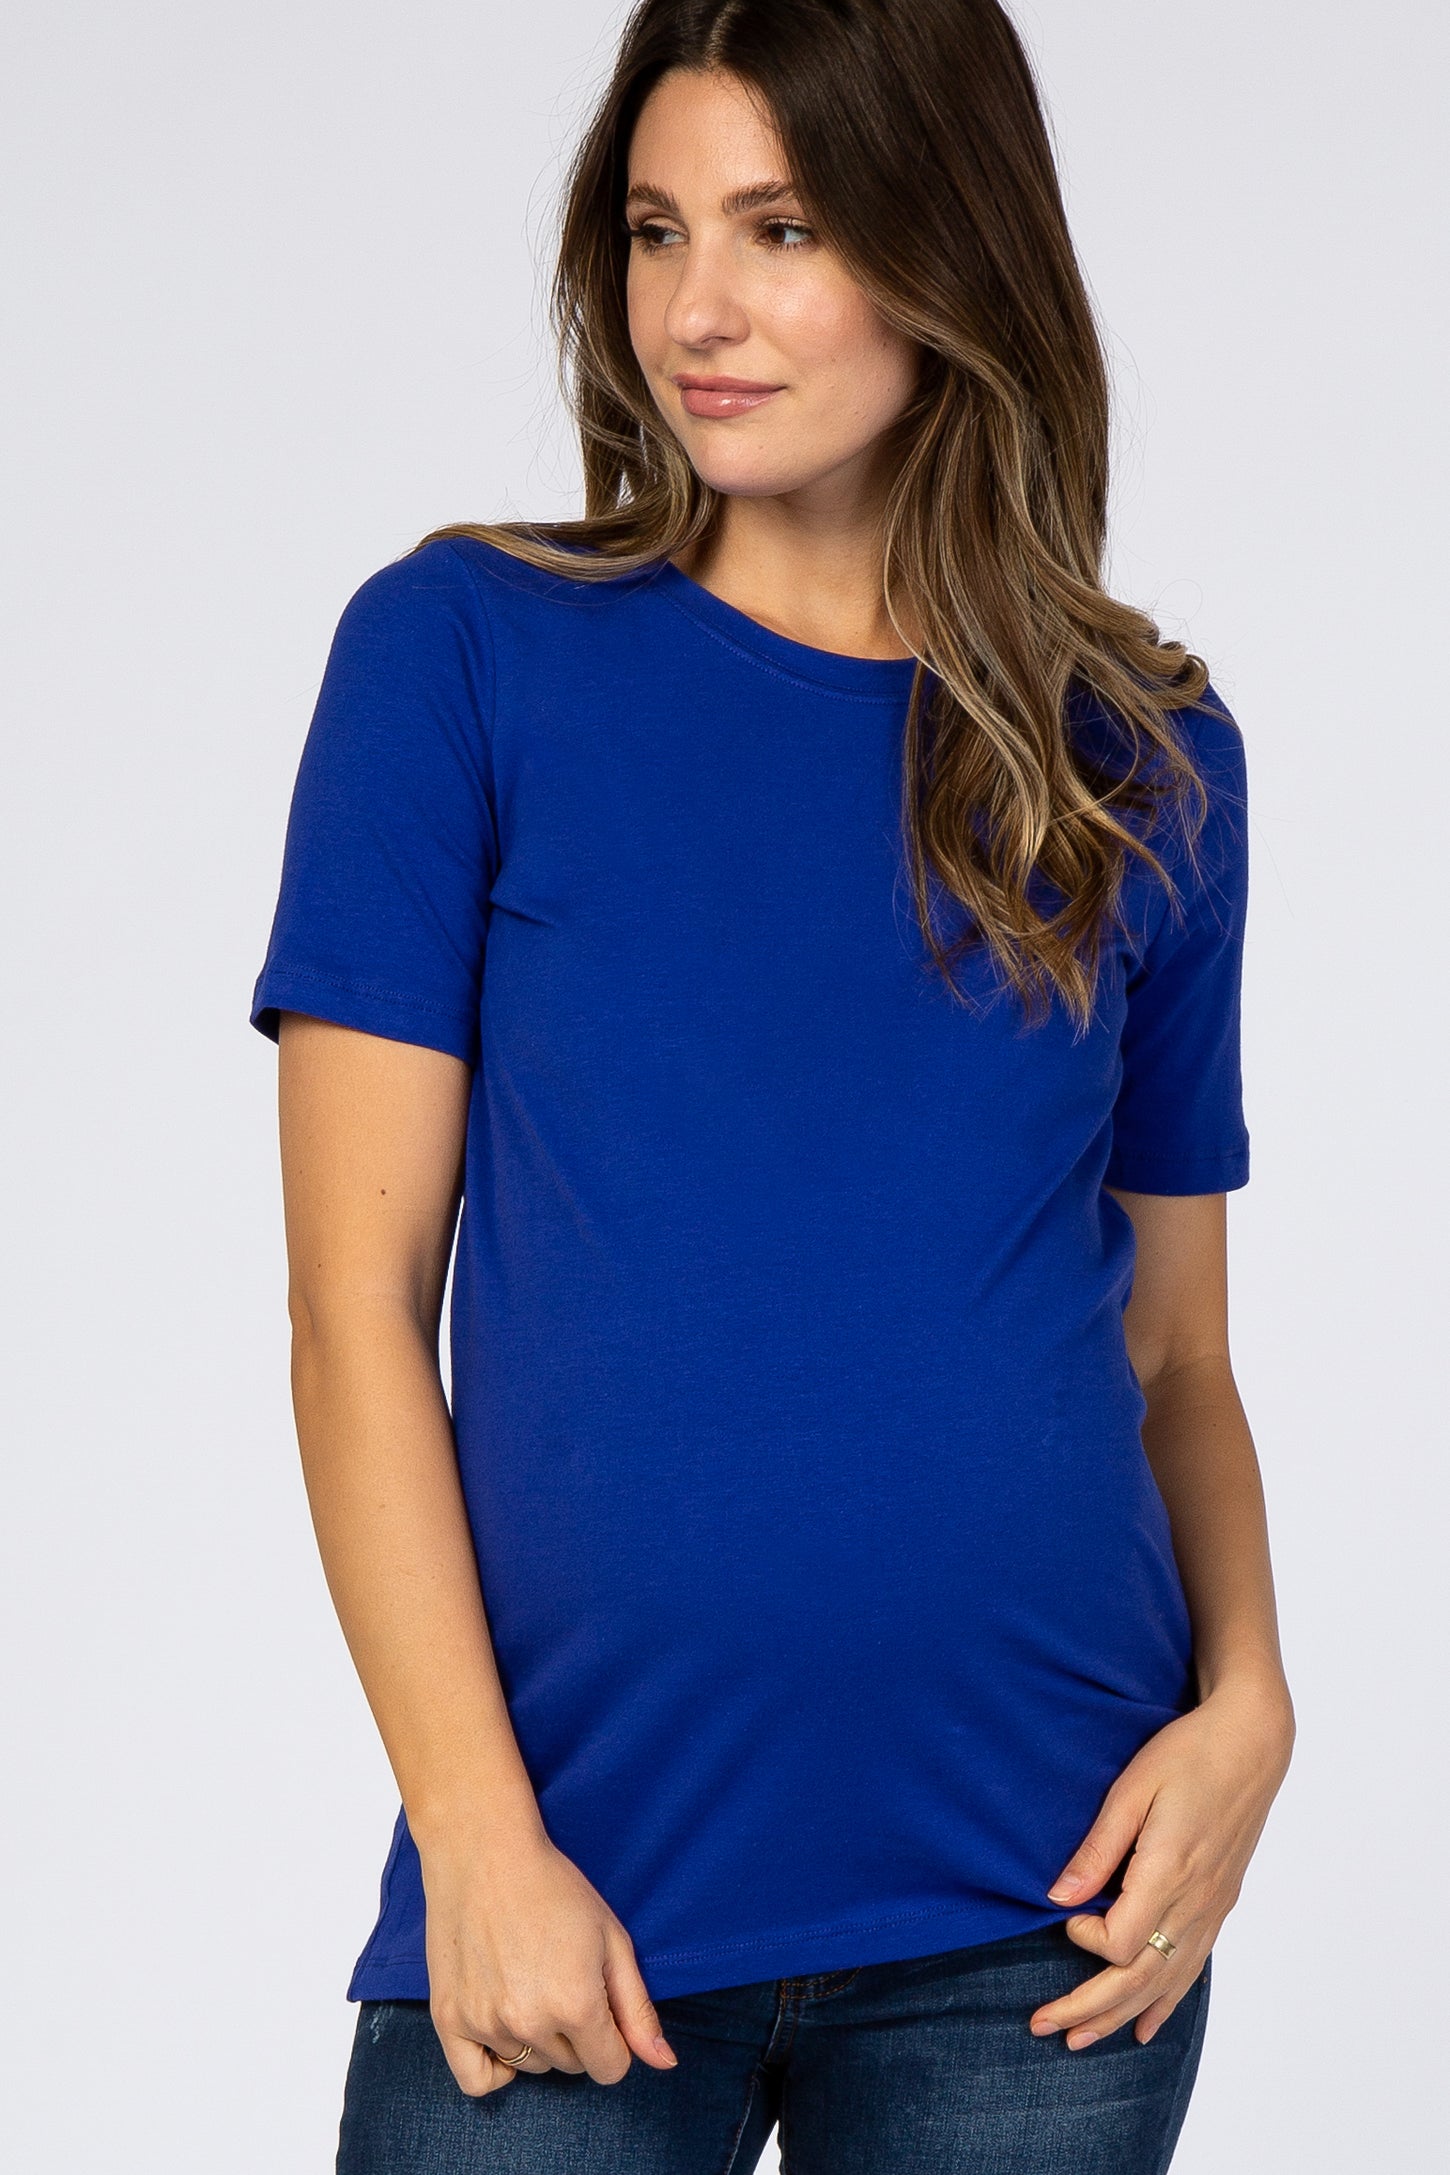 Royal Blue Crew Neck Short Sleeve Maternity Top